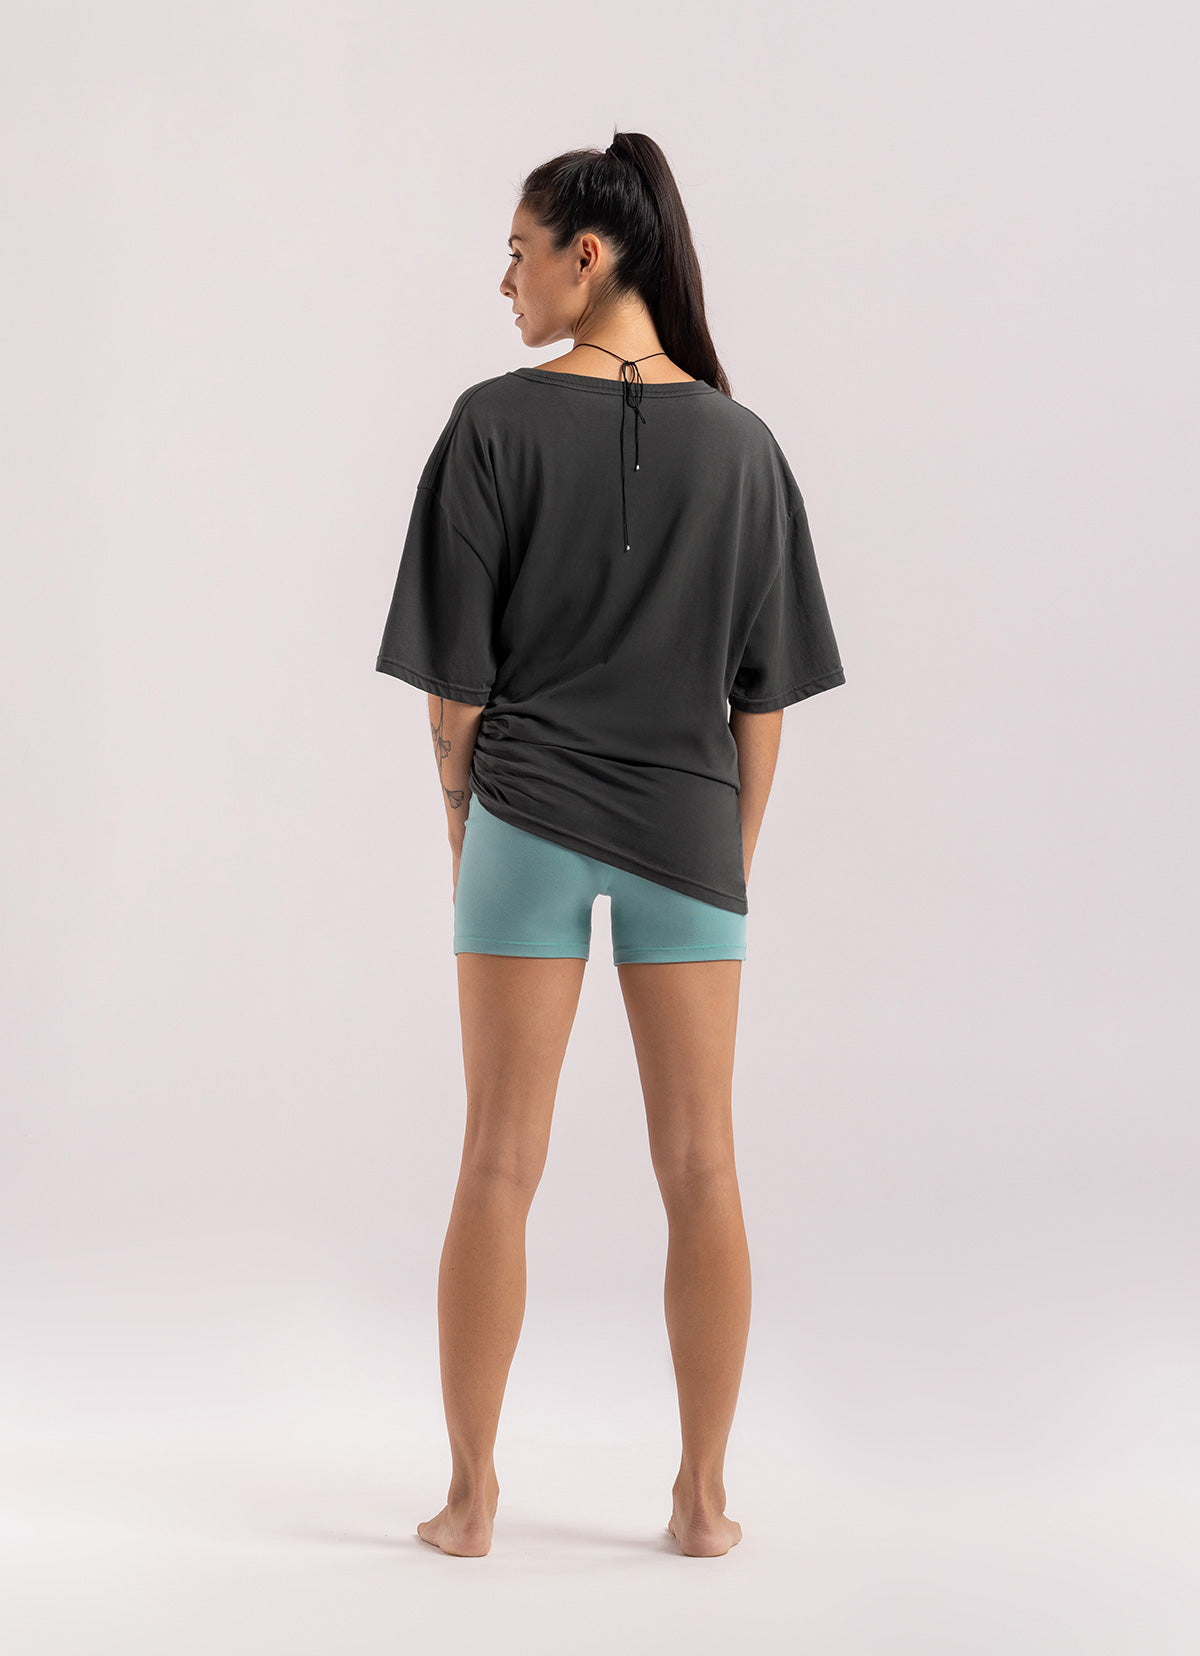 BM Yoga T-shirts (Unisex)_Charcoal